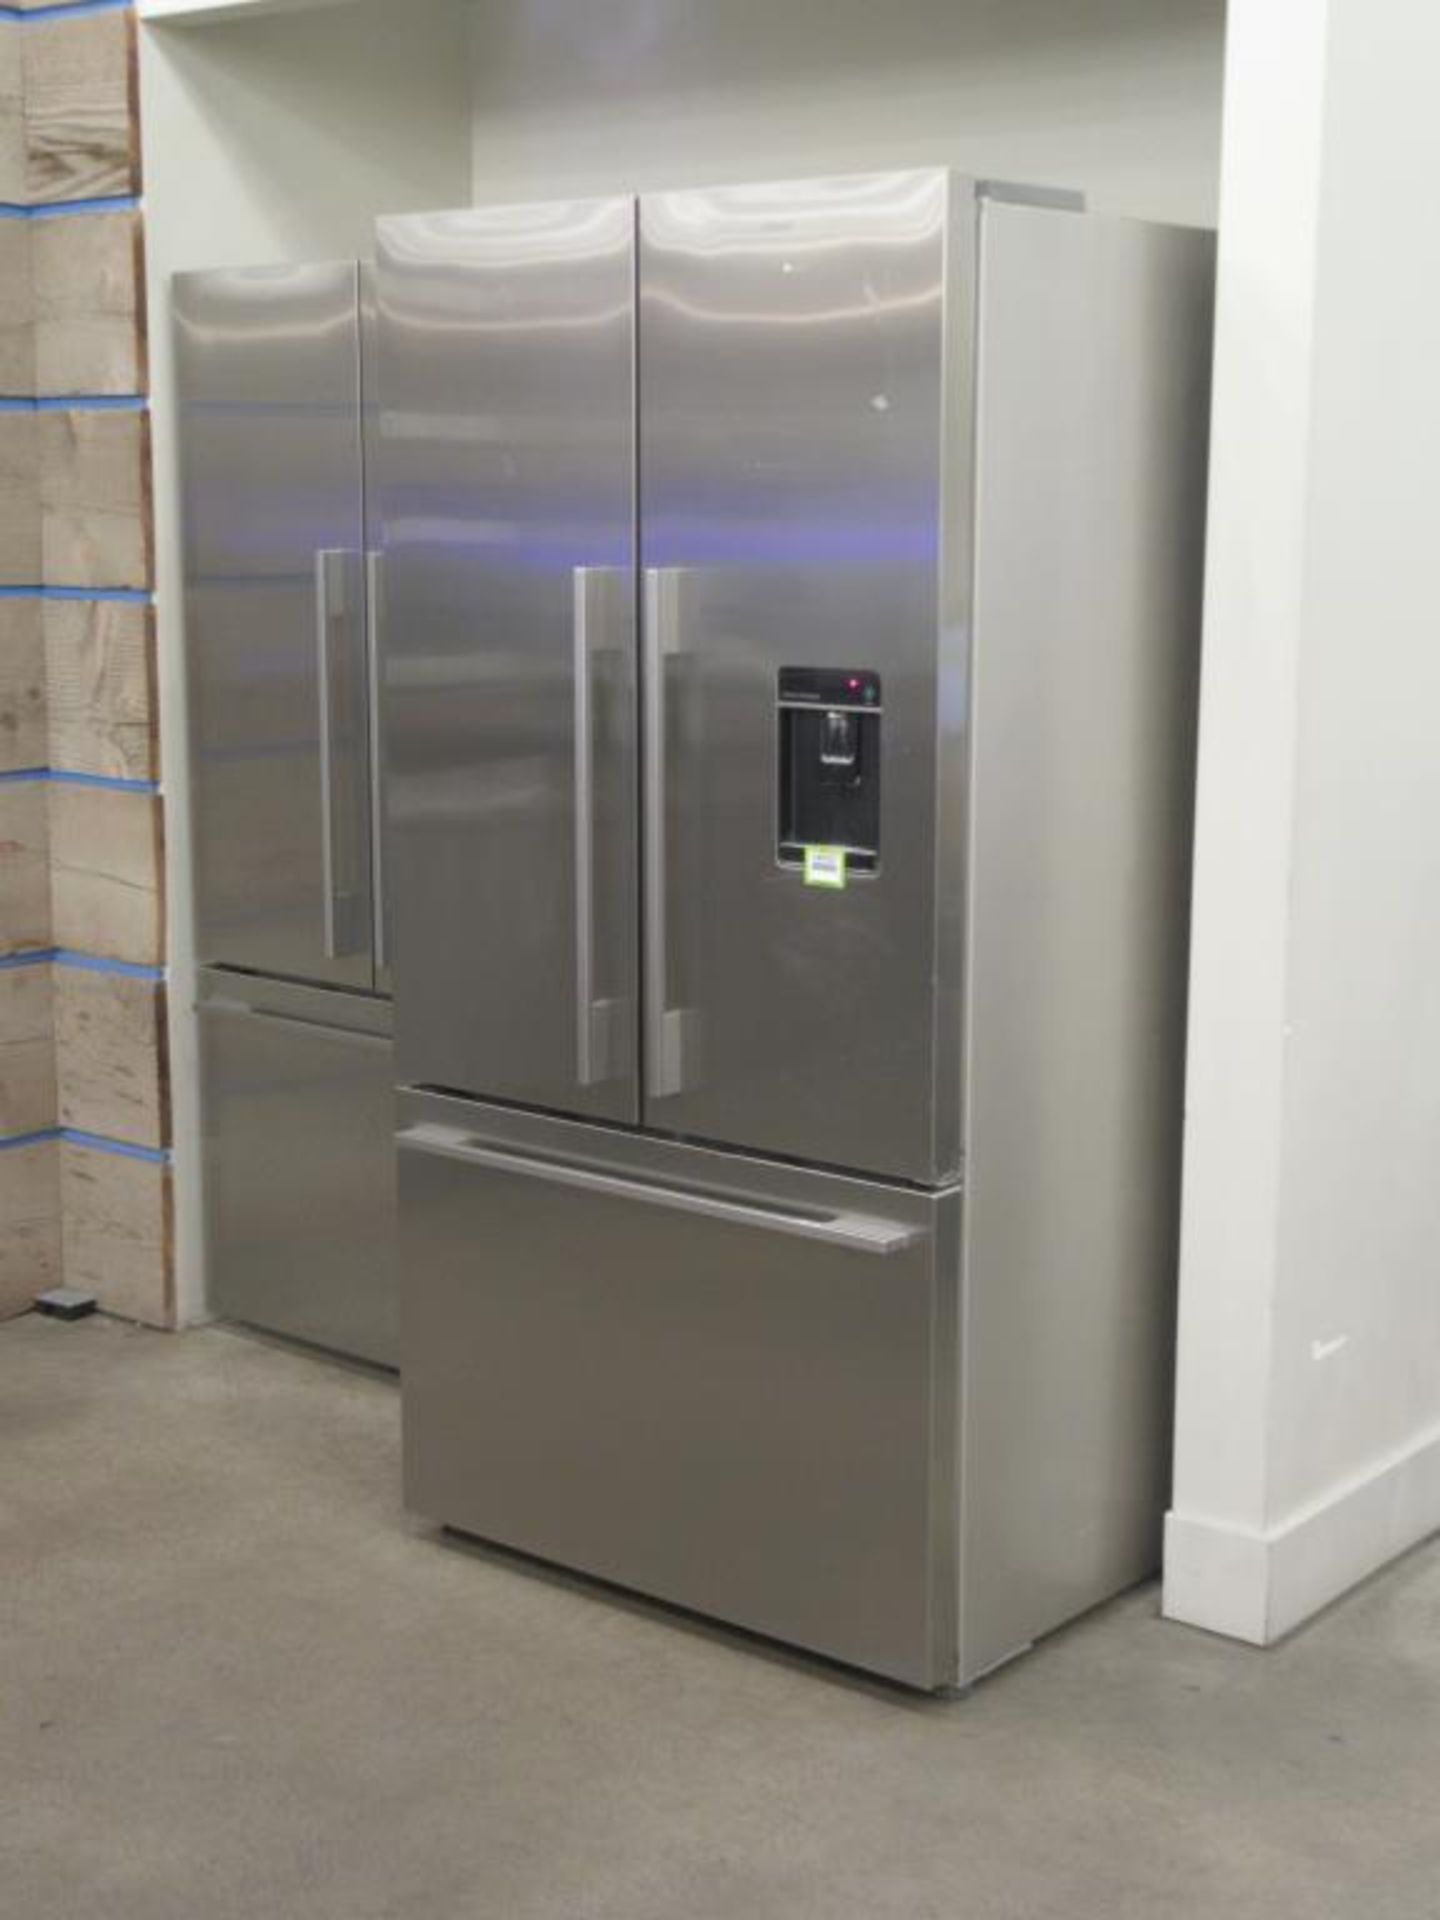 Fisher & Paykel Refrigerator/Freezer